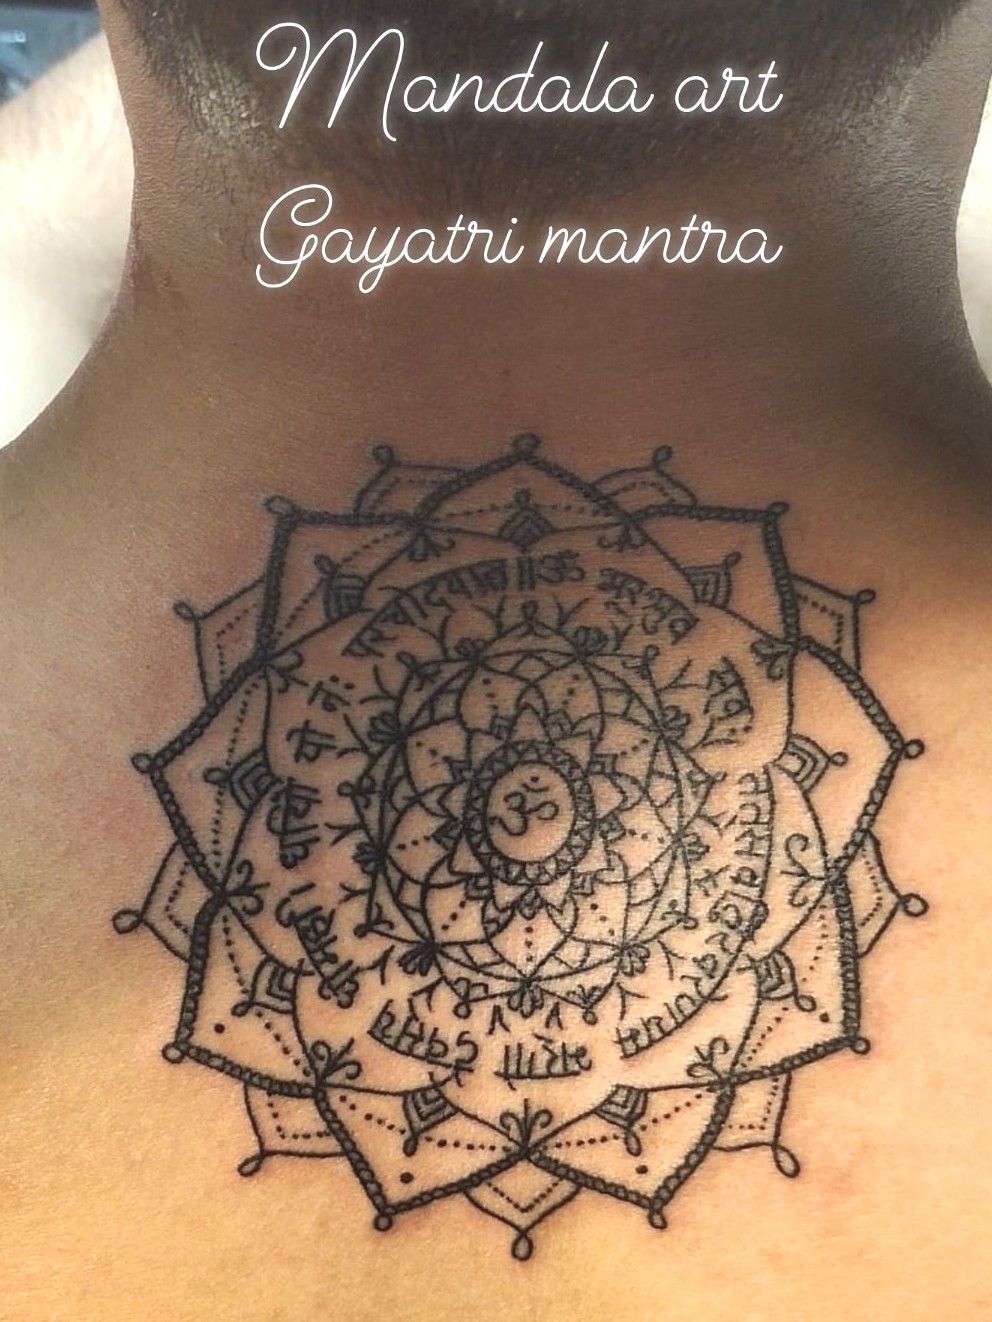 Gayatri Mantra Tattoo for Peace  Tattoo Ink Master